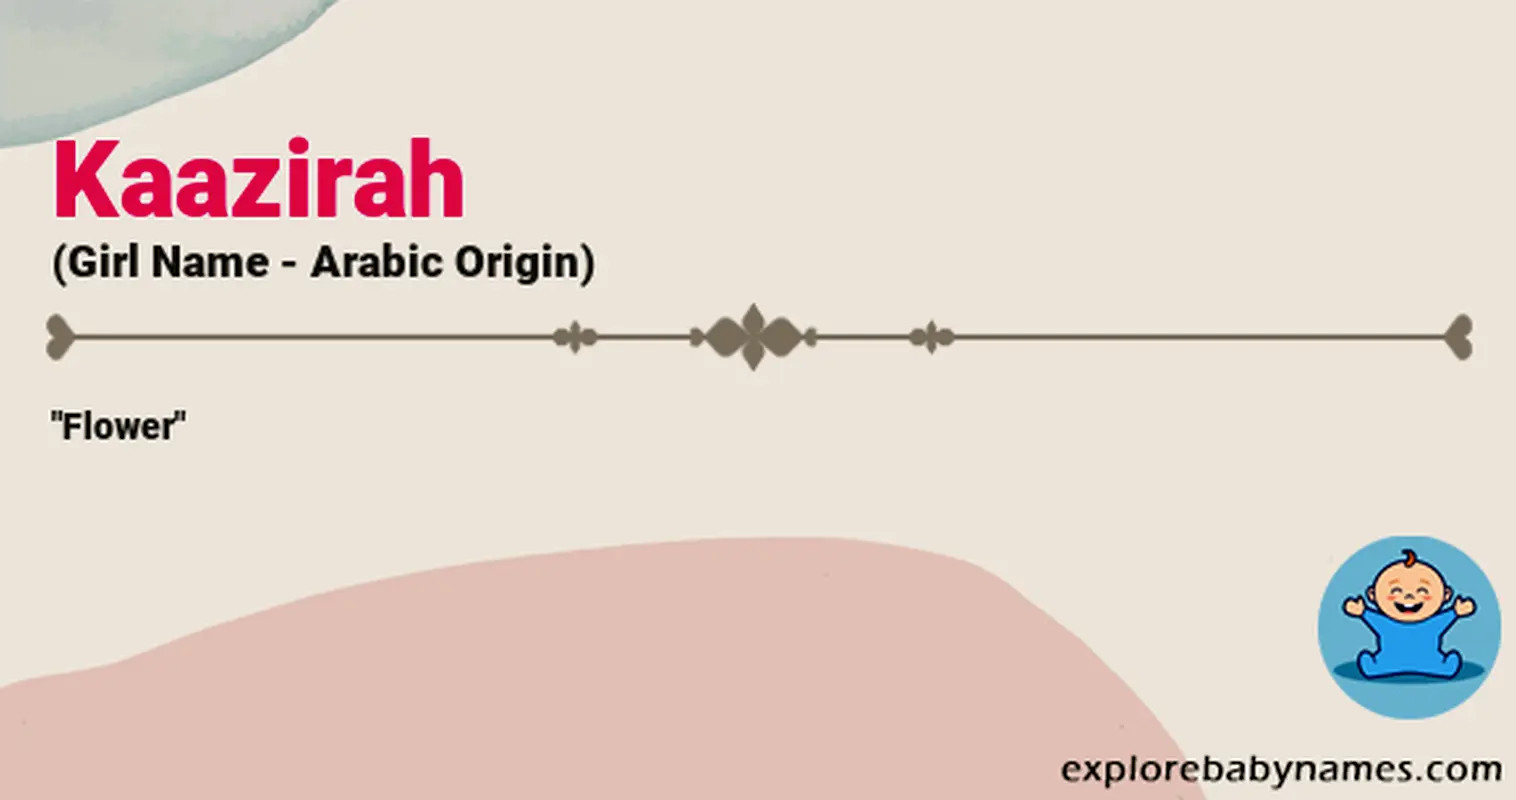 Meaning of Kaazirah